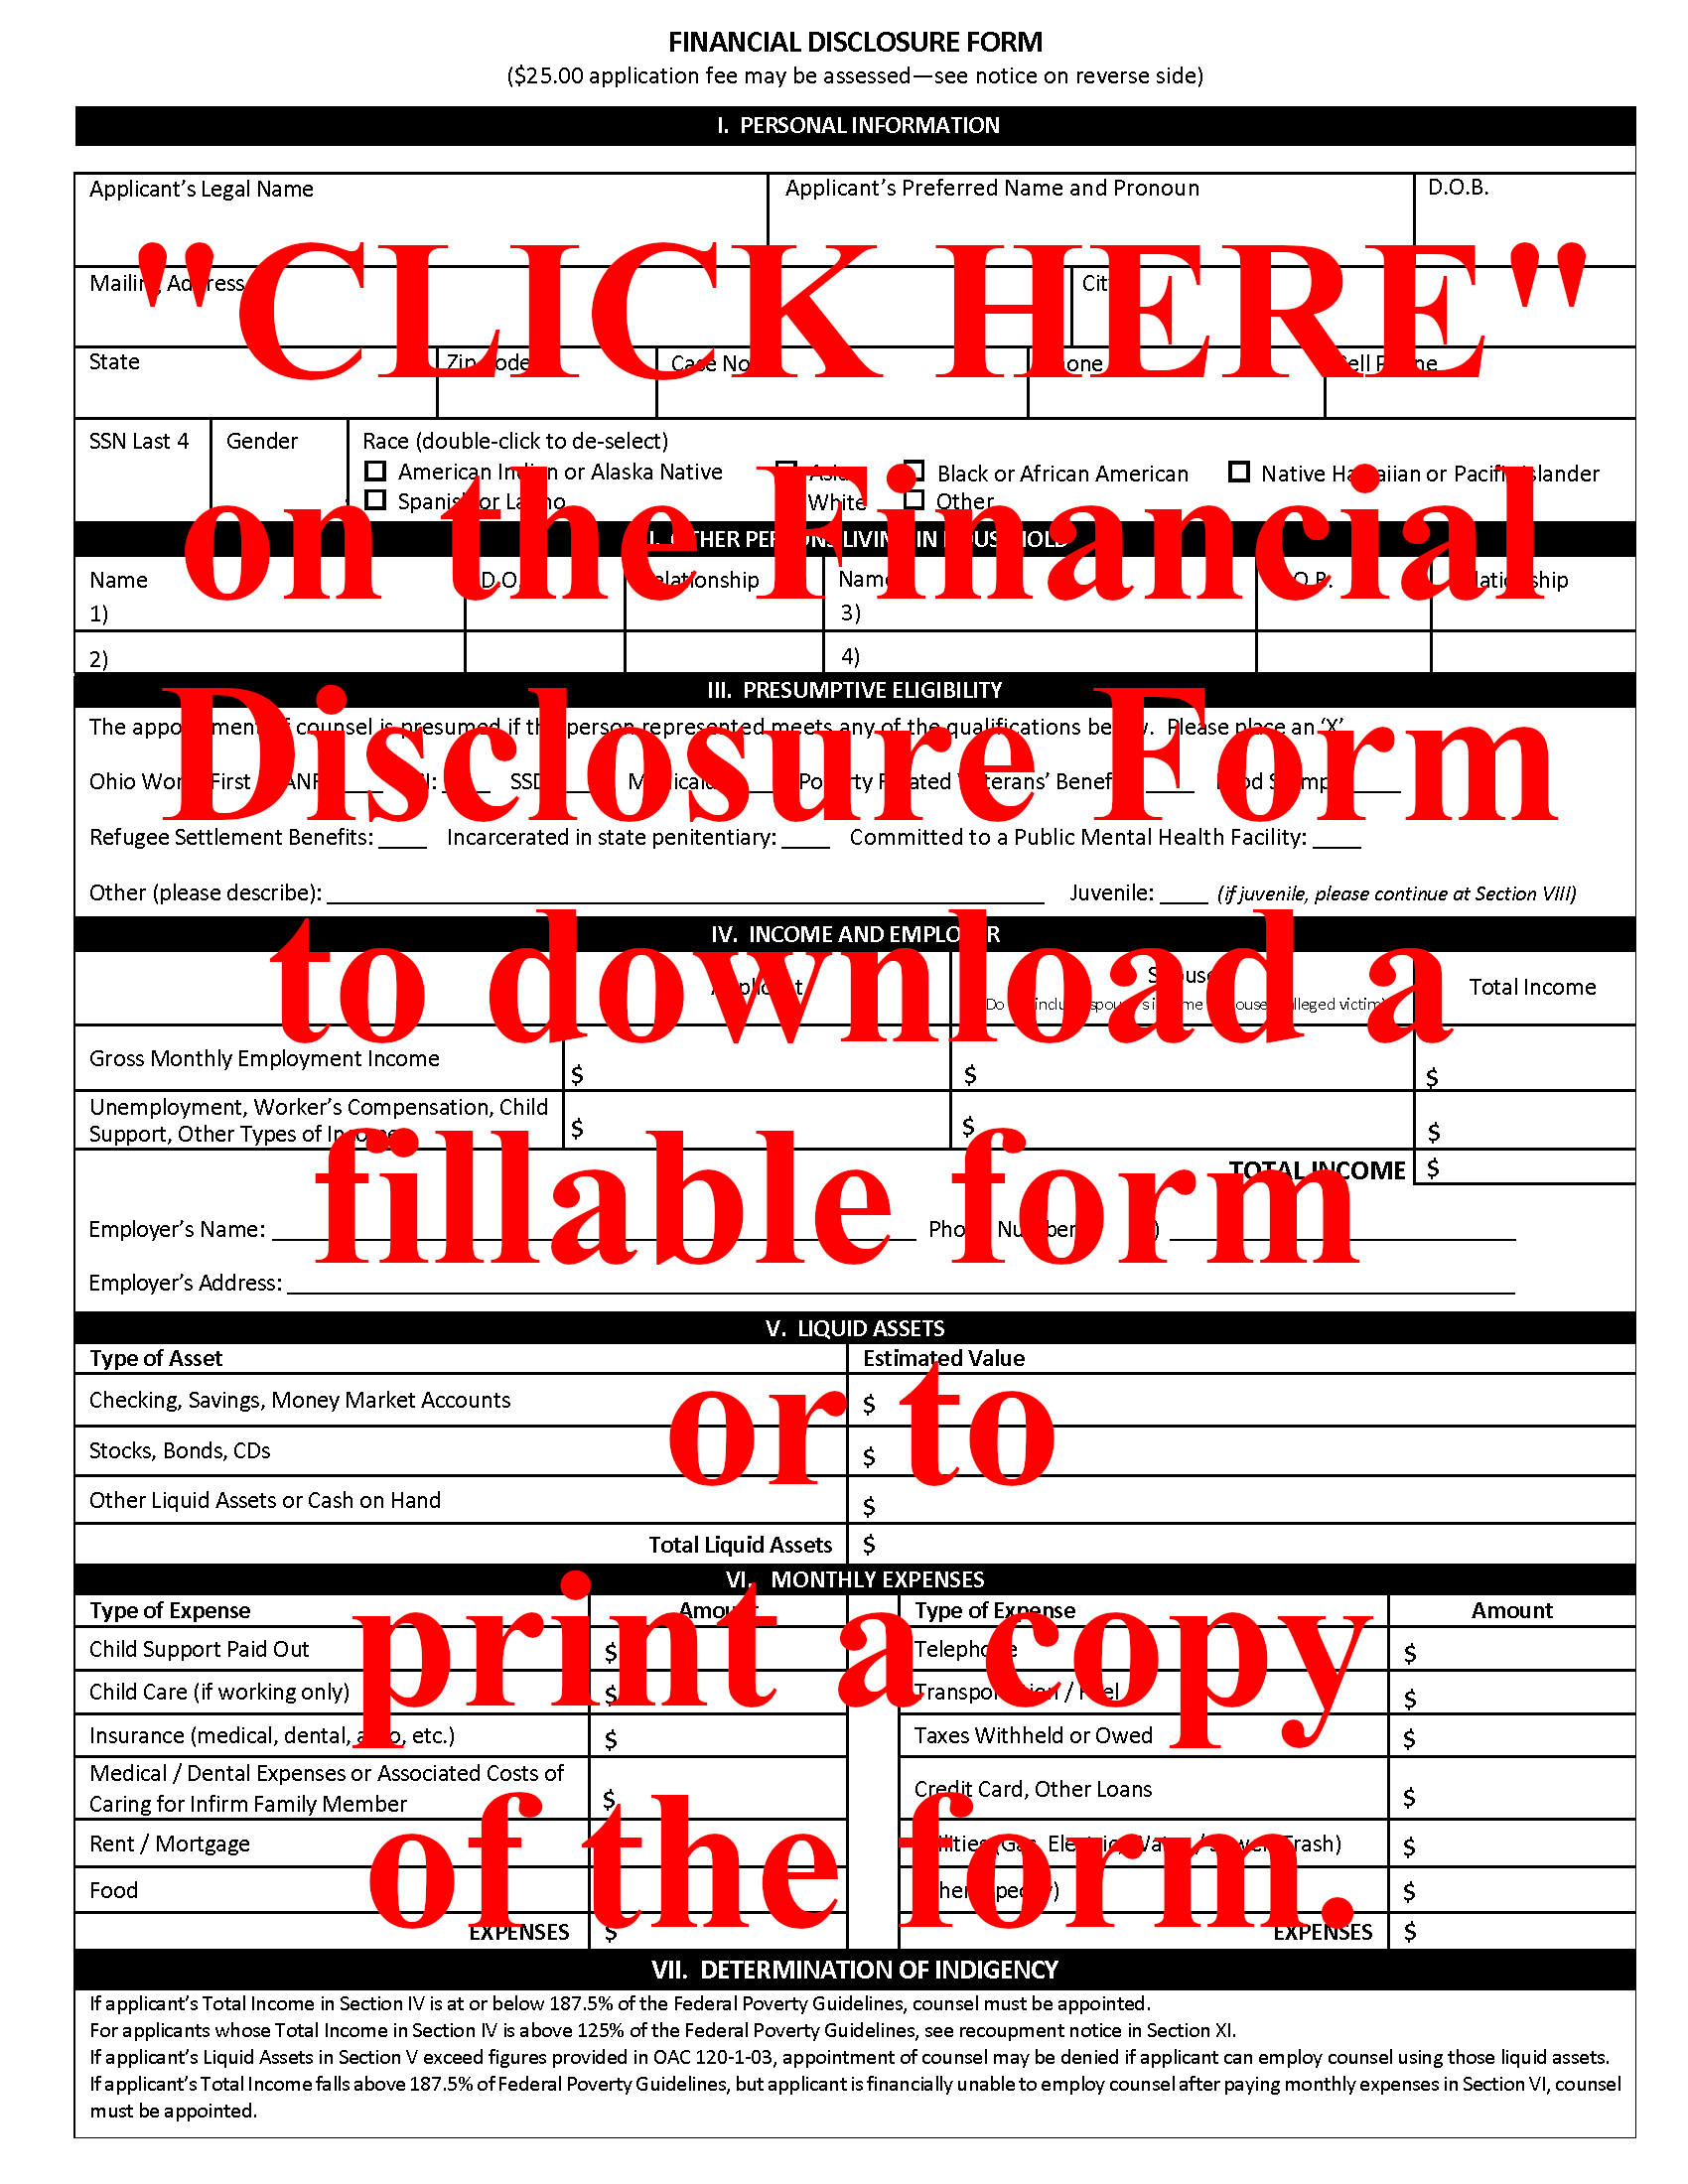 Financial-Disclosure-Form-image